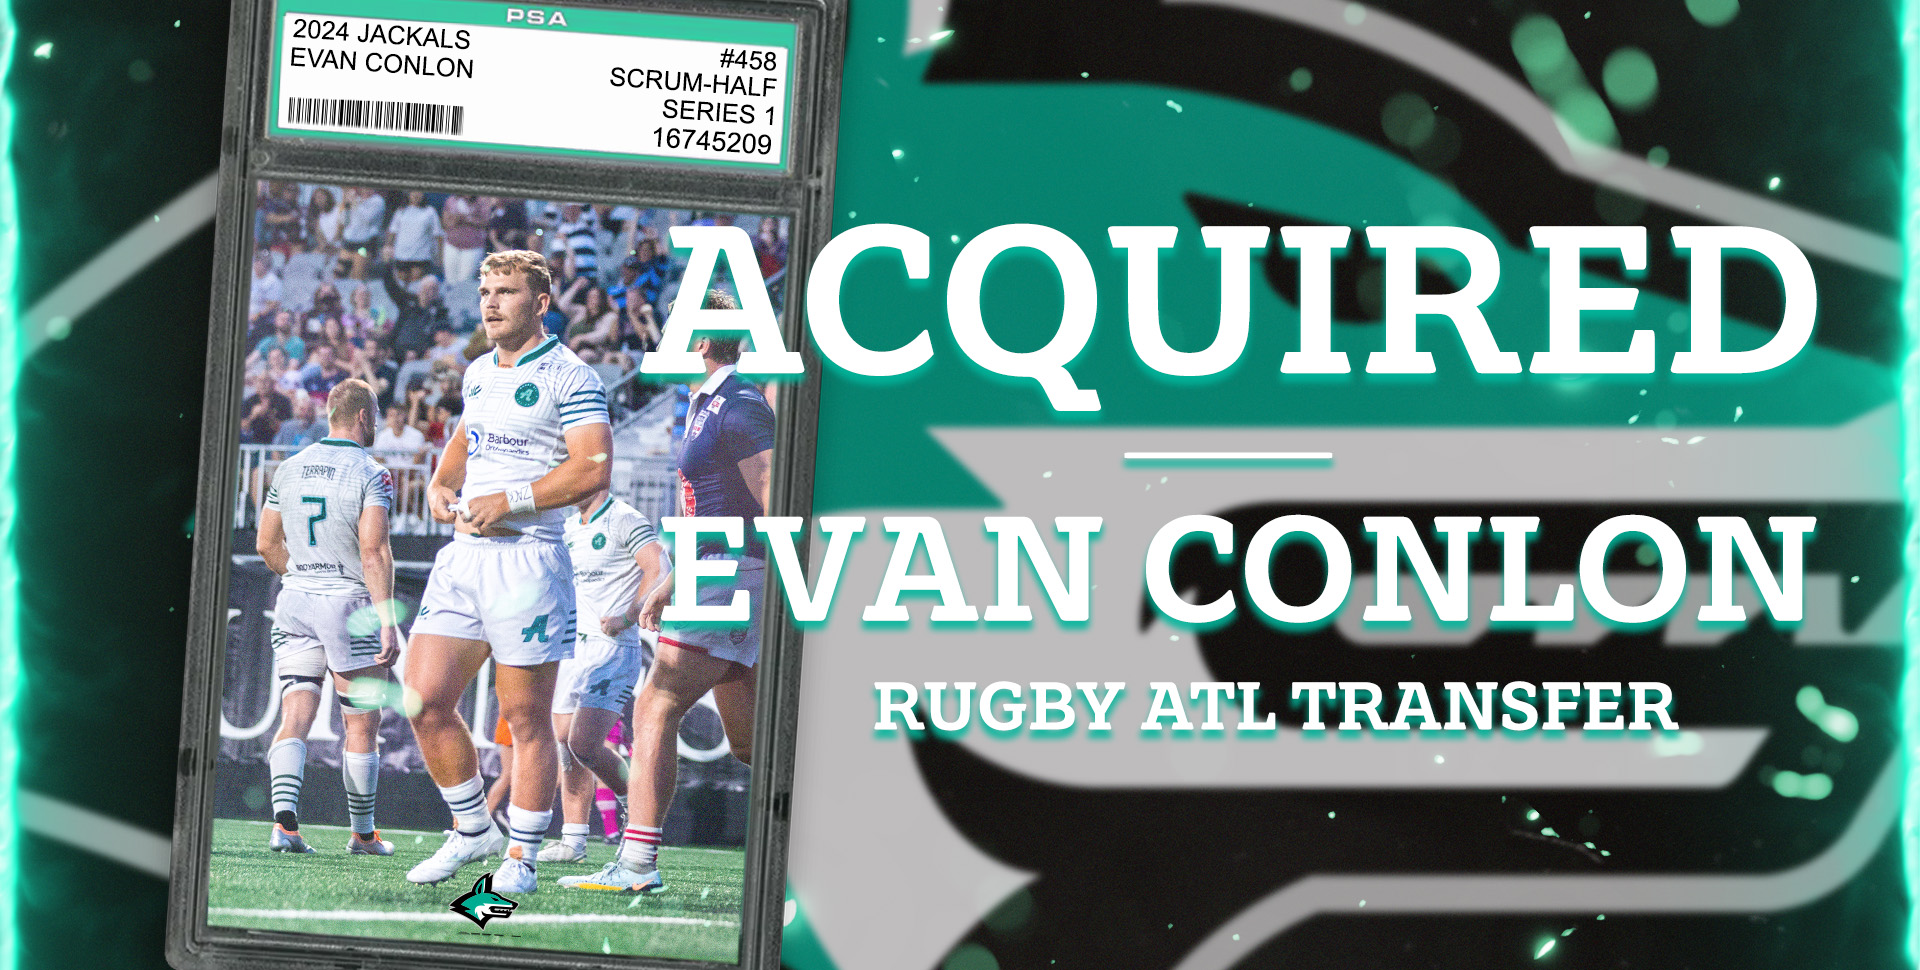 The Dallas Jackals have acquired scrum half, Evan Conlon, from Rugby ATL